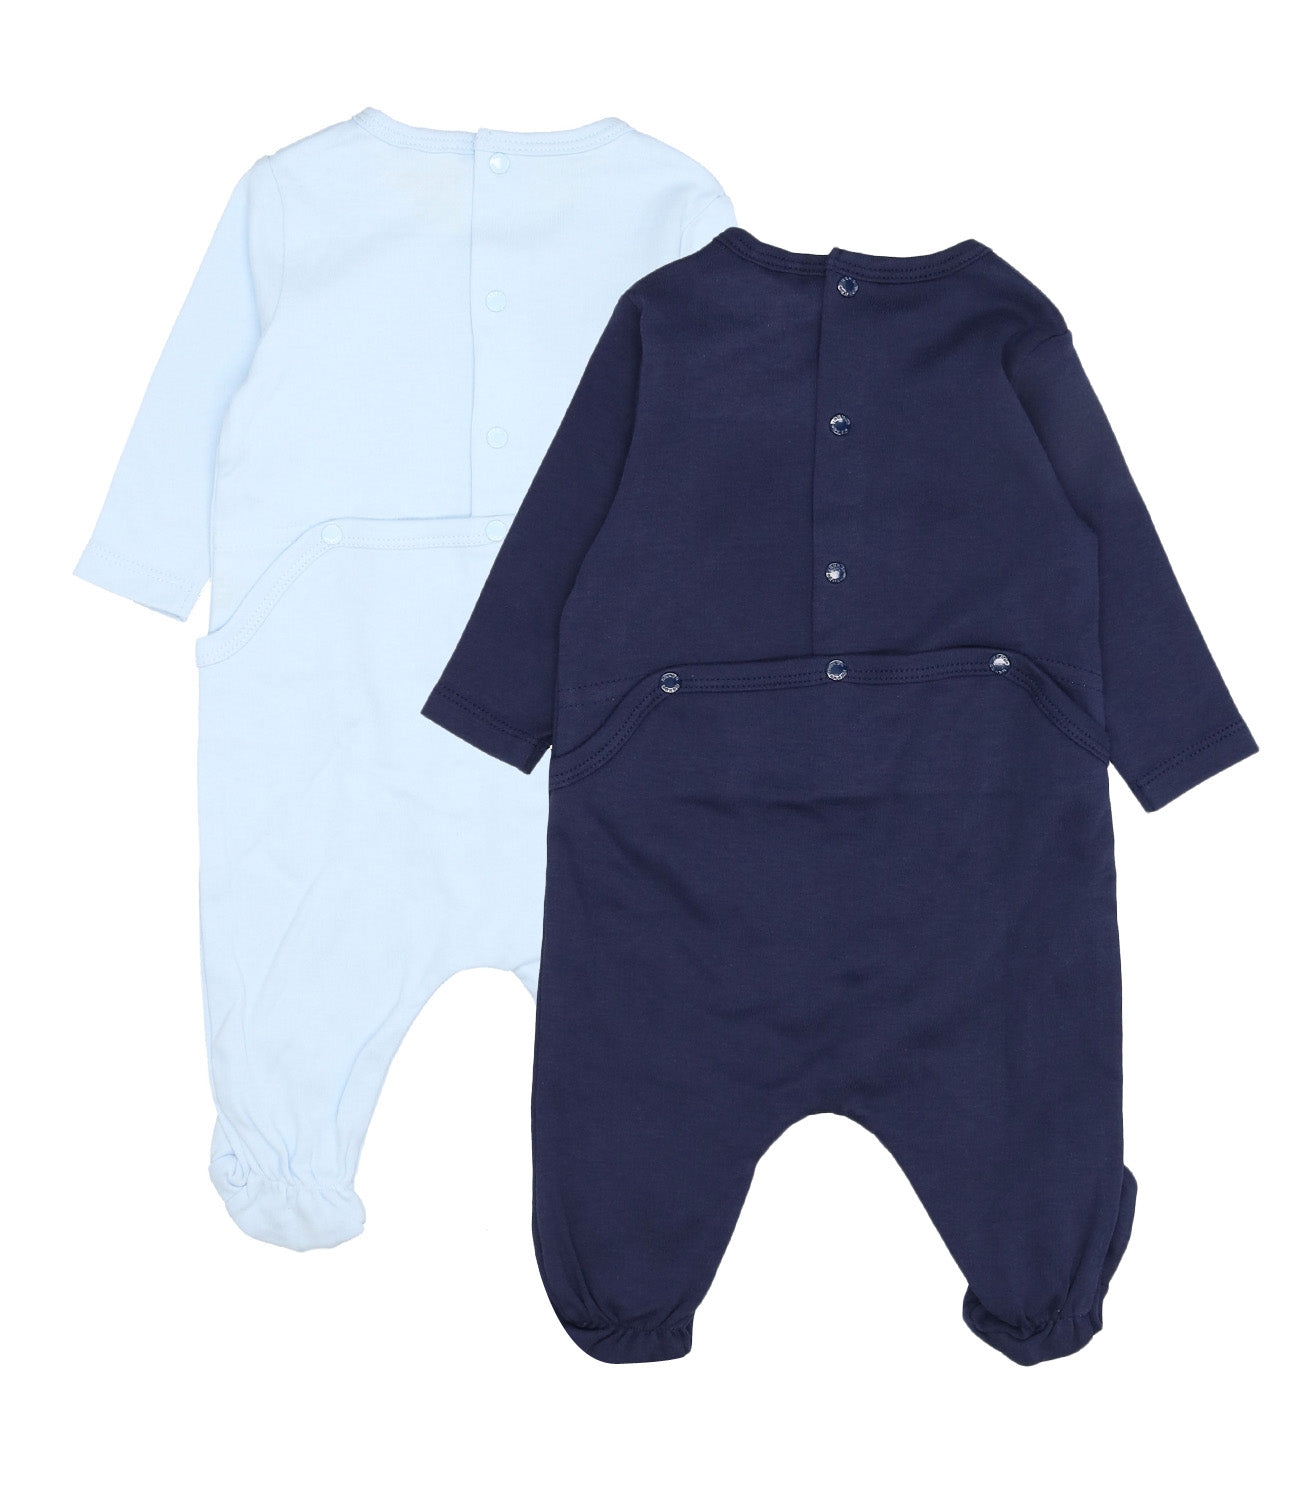 Kenzo Kids | Set of Two Blue and Light Blue Sleepsuits